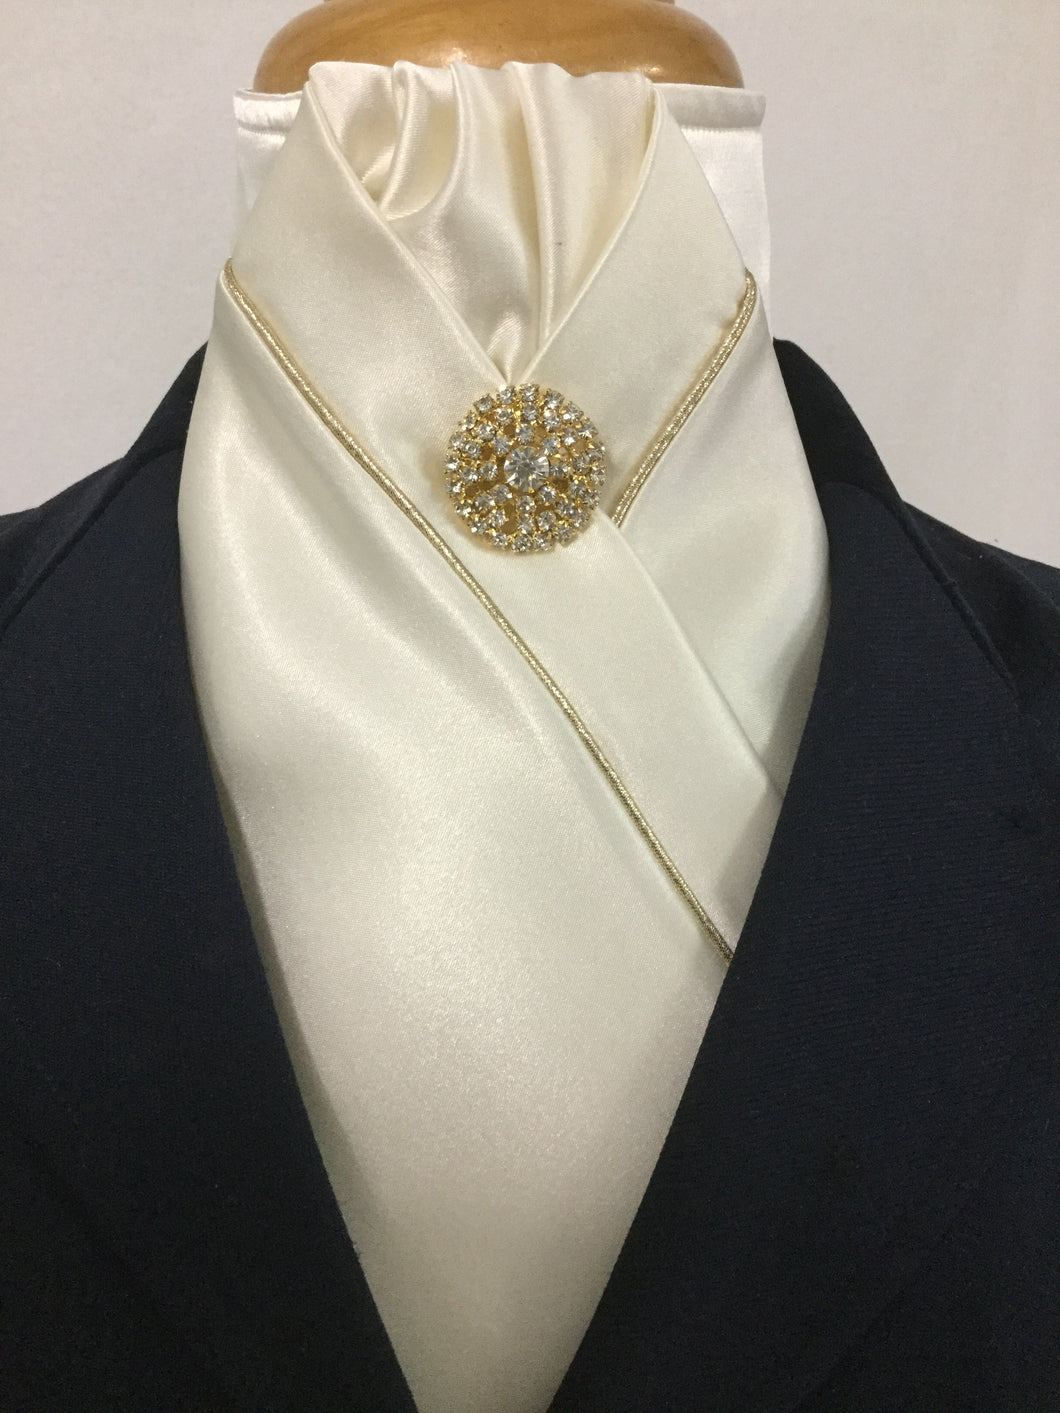 HHD Cream Satin Pretied Dressage Stock Tie with Gold